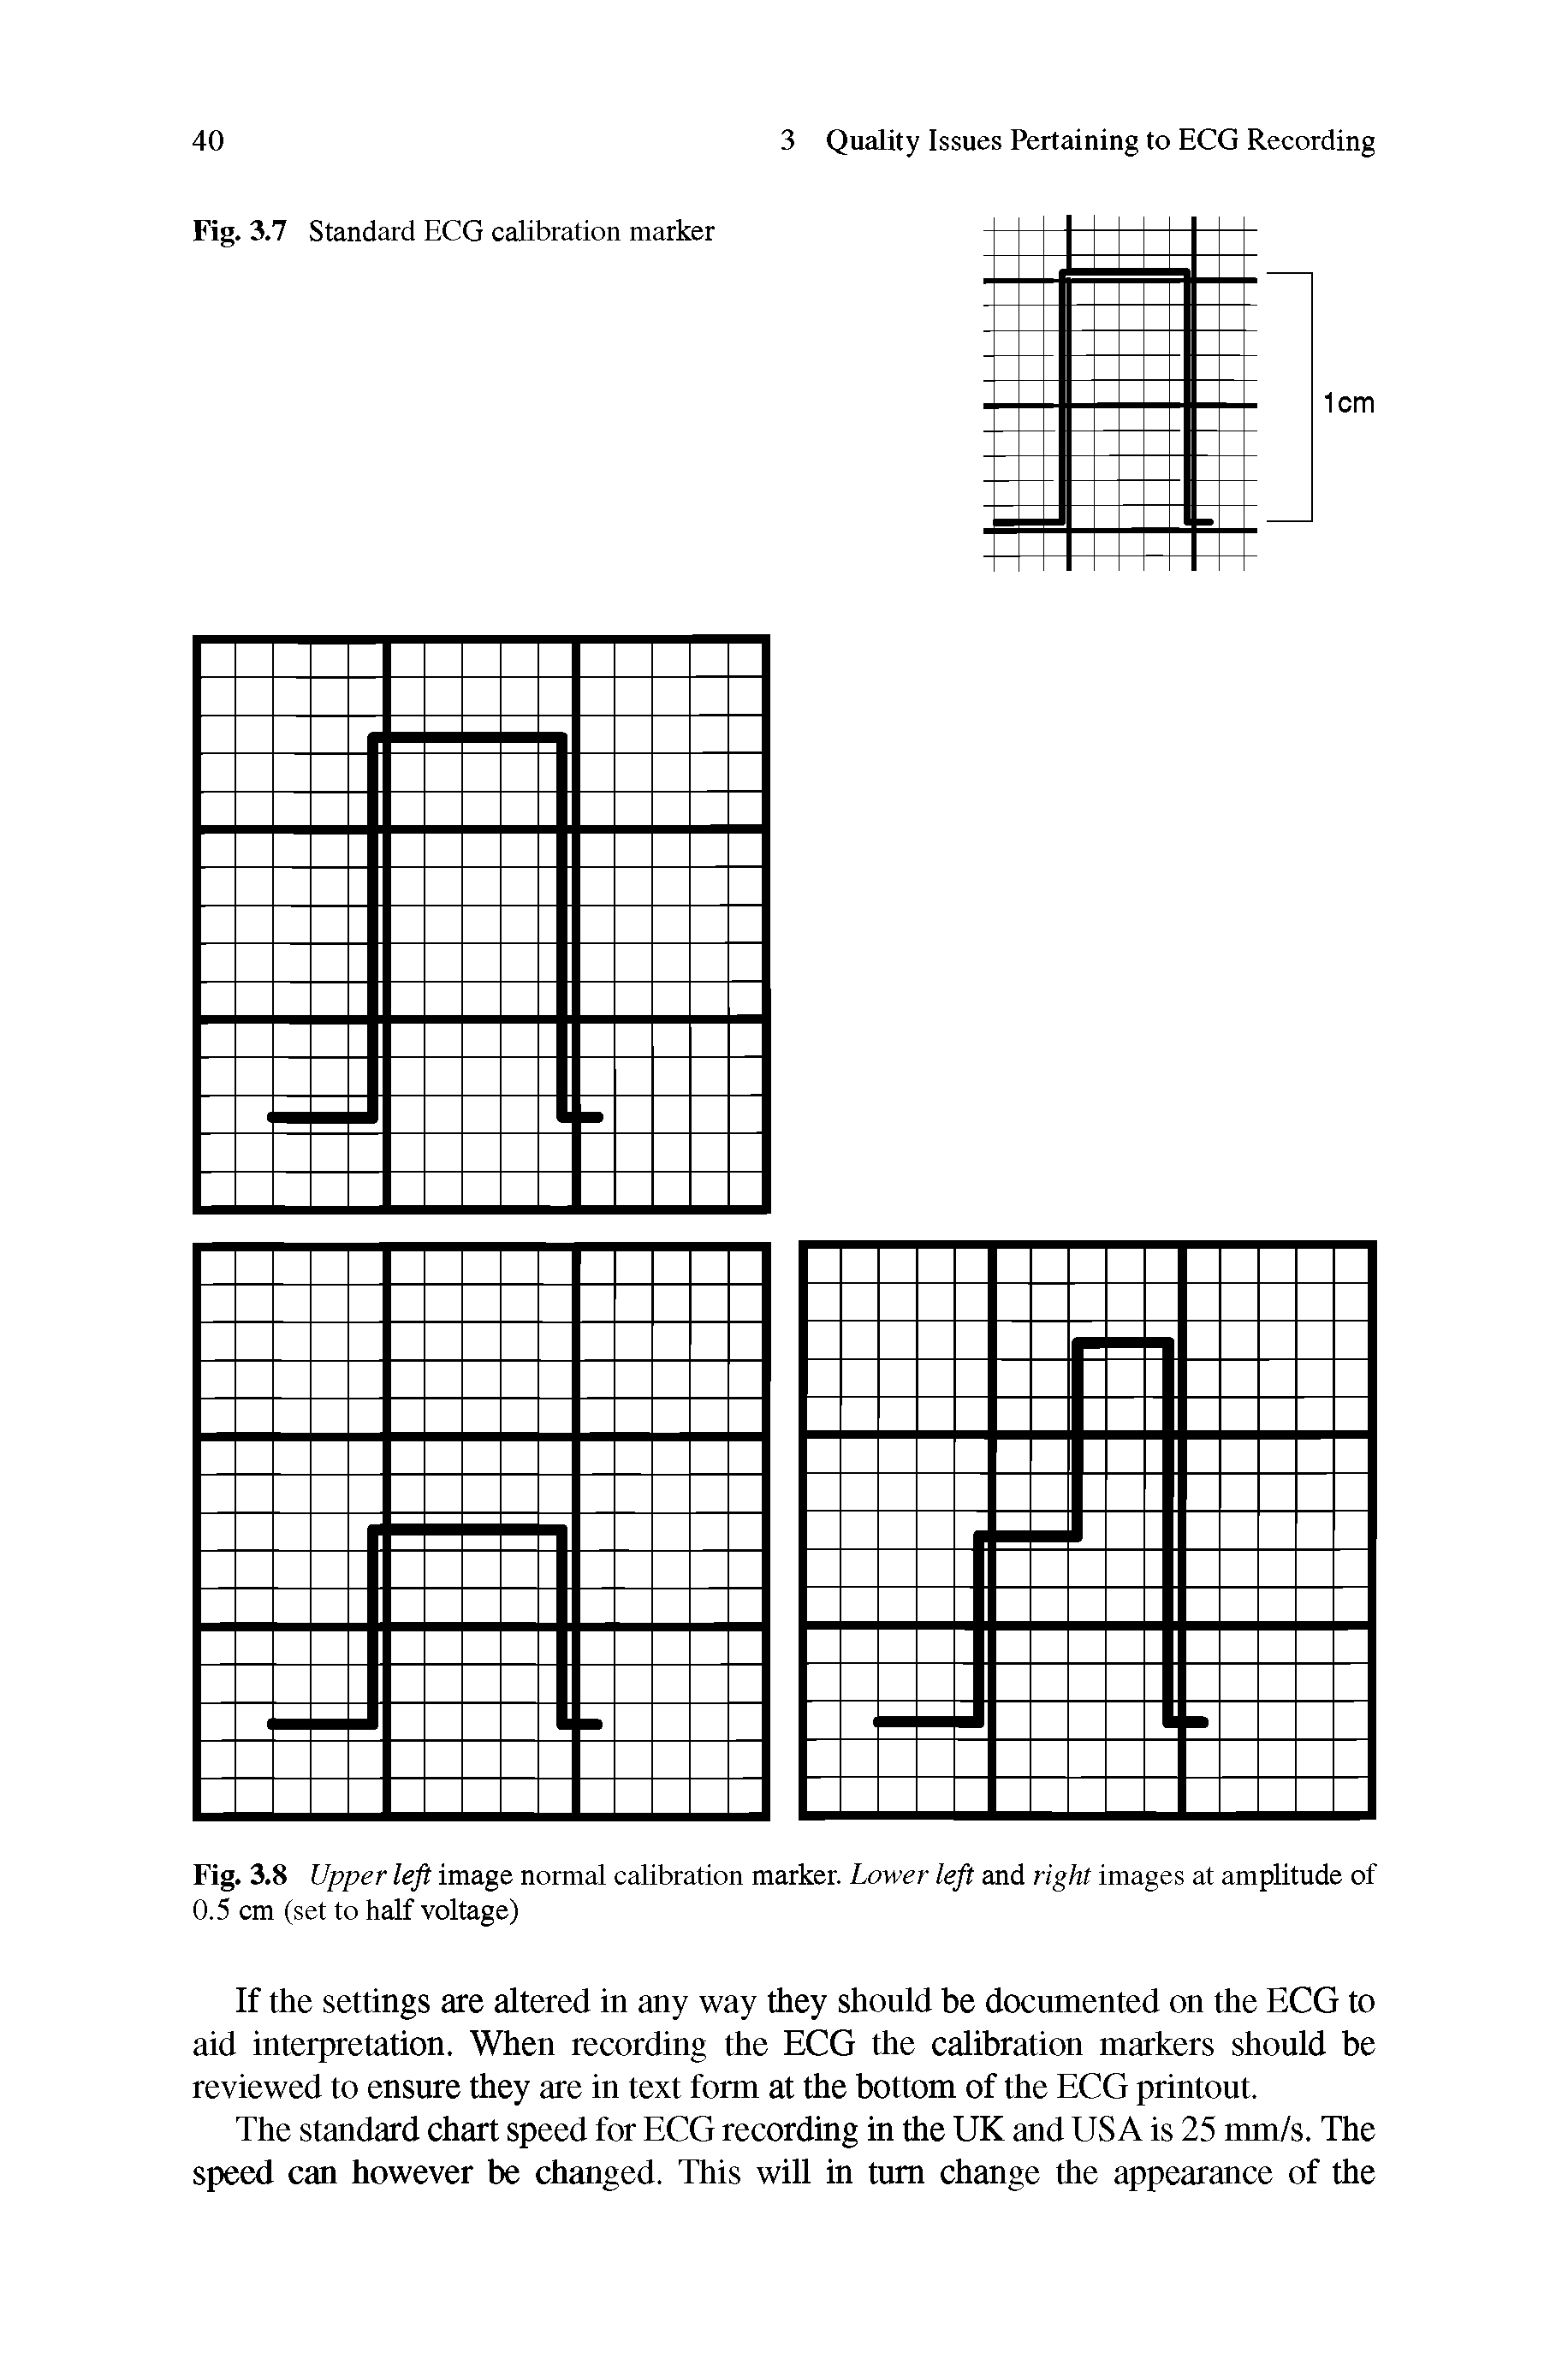 Fig. 3.8 Upper left image normal calibration marker. Lower left and right images at amplitude of 0.5 cm (set to half voltage)...